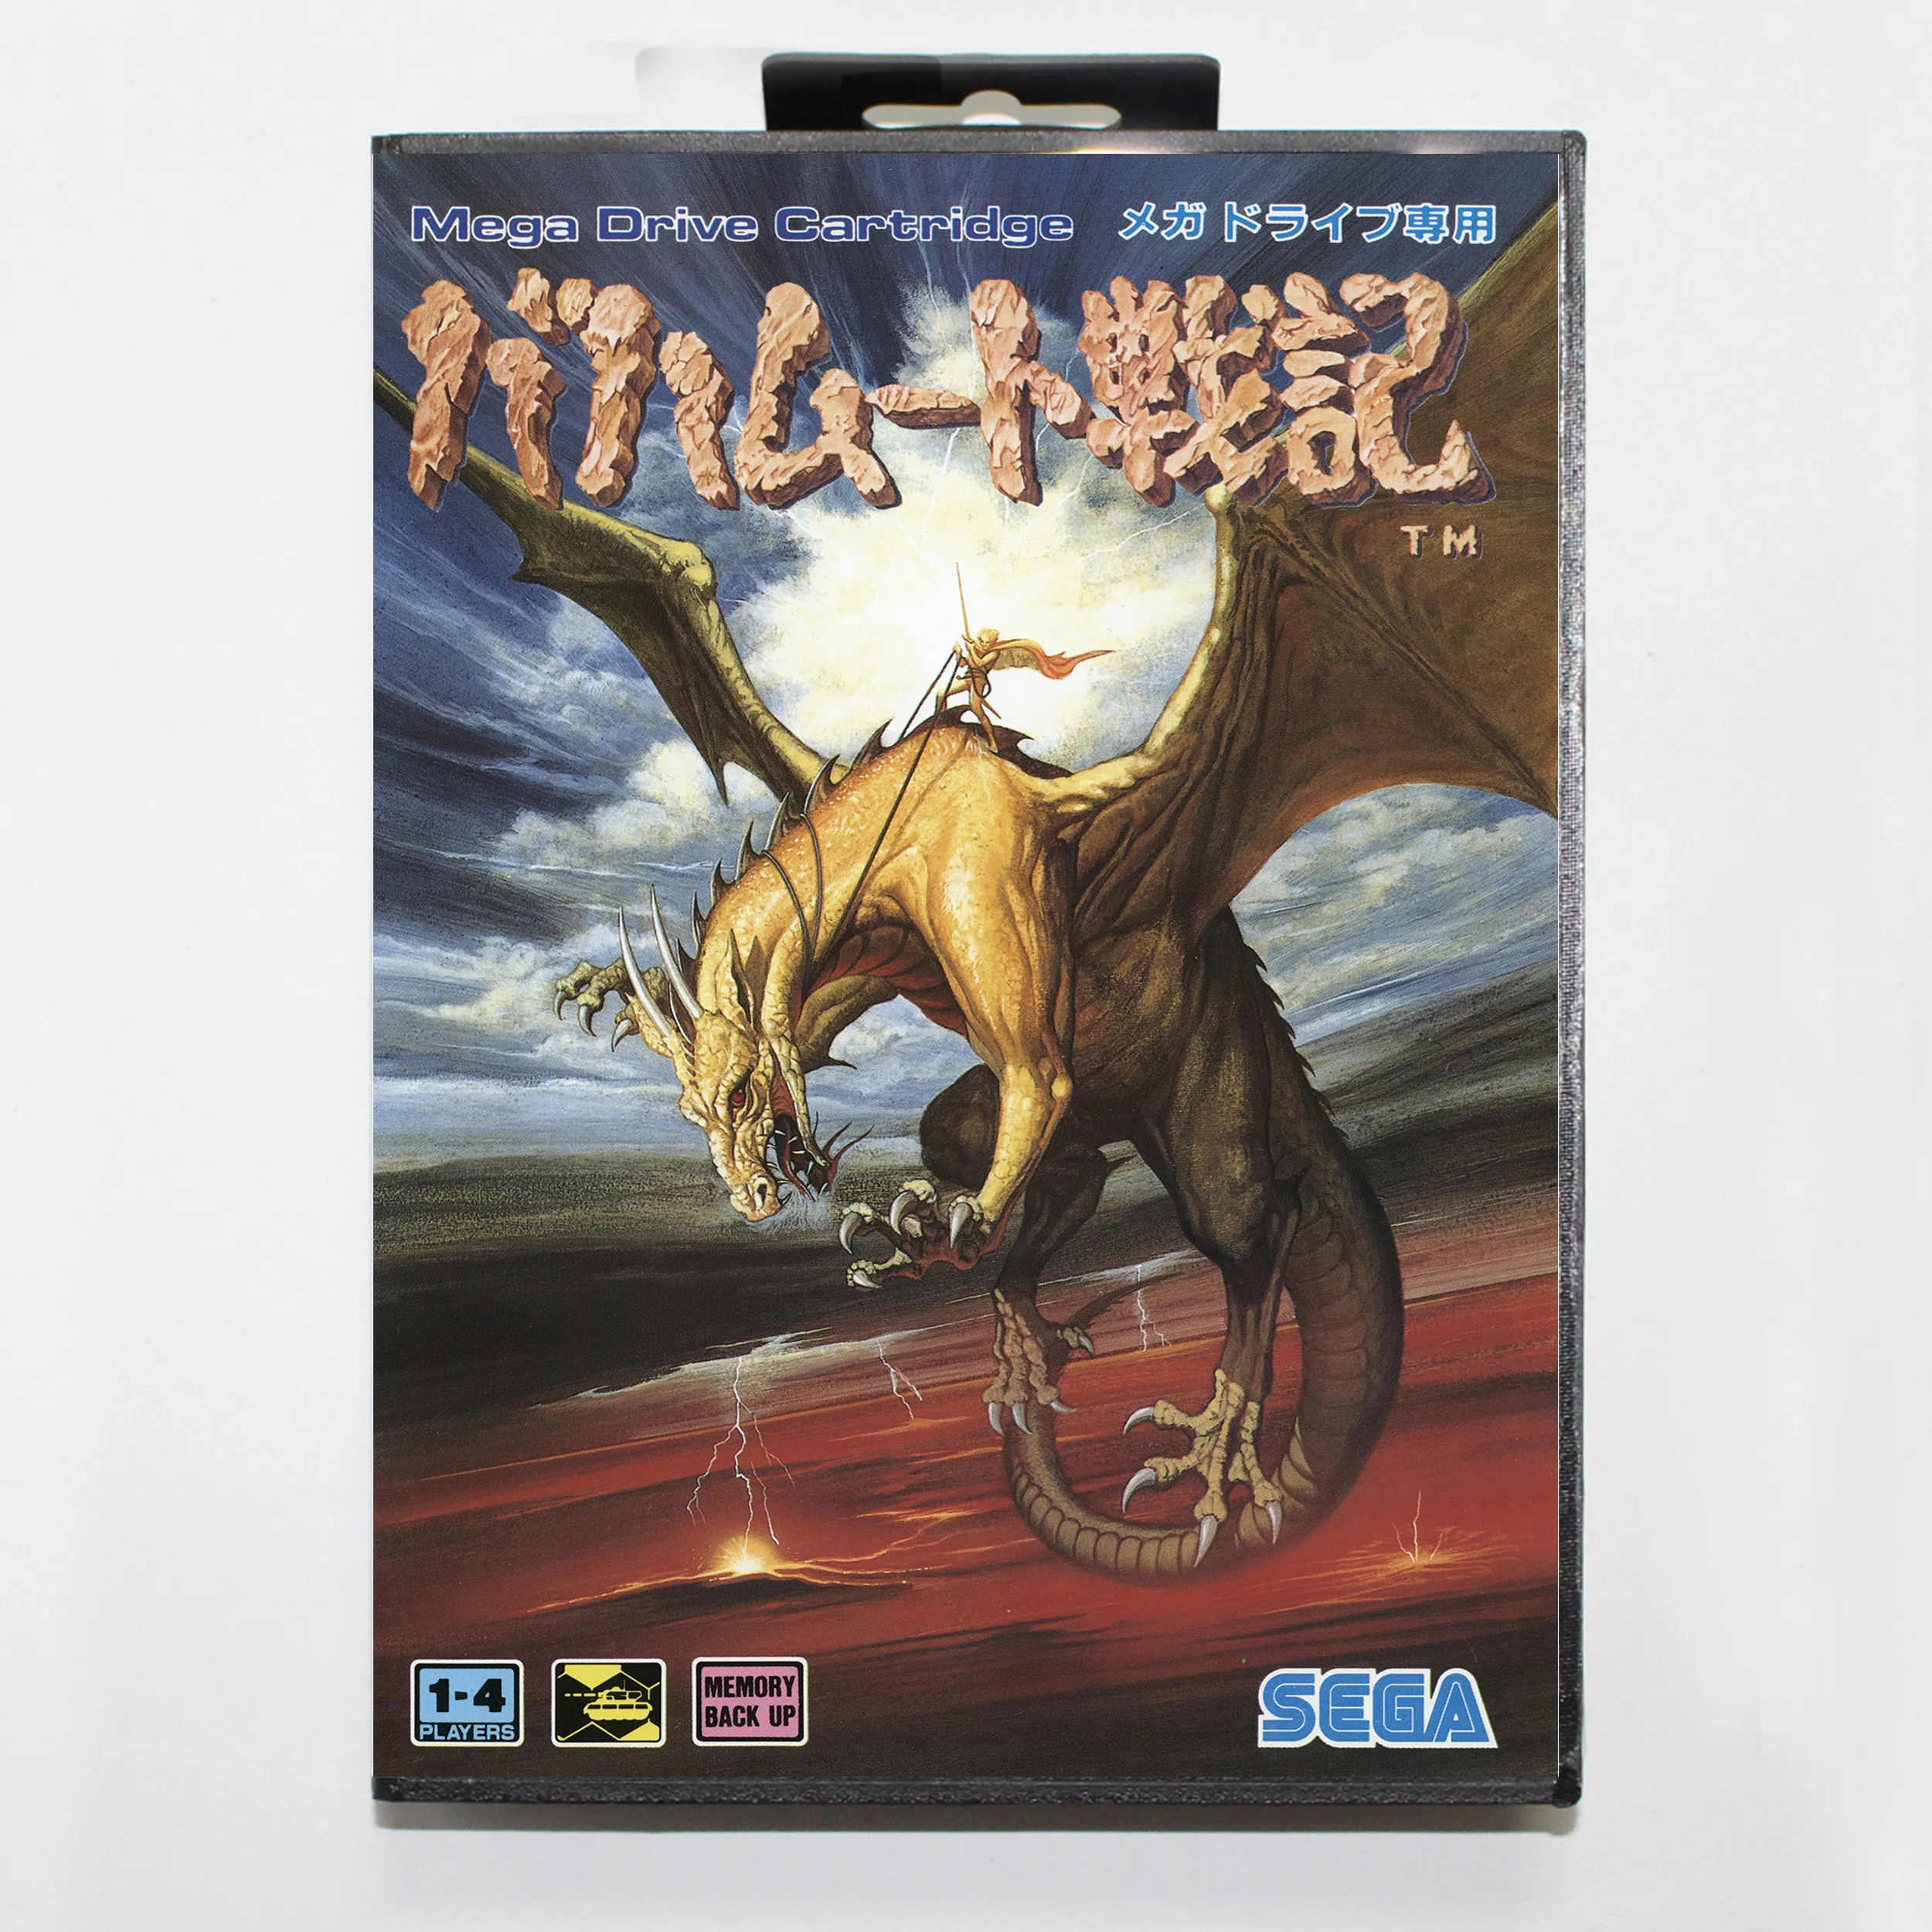 

Игровая карта Bahamut Senki 16bit MD для Sega Mega Drive/ Genesis с чехлом JP, Розничная коробка